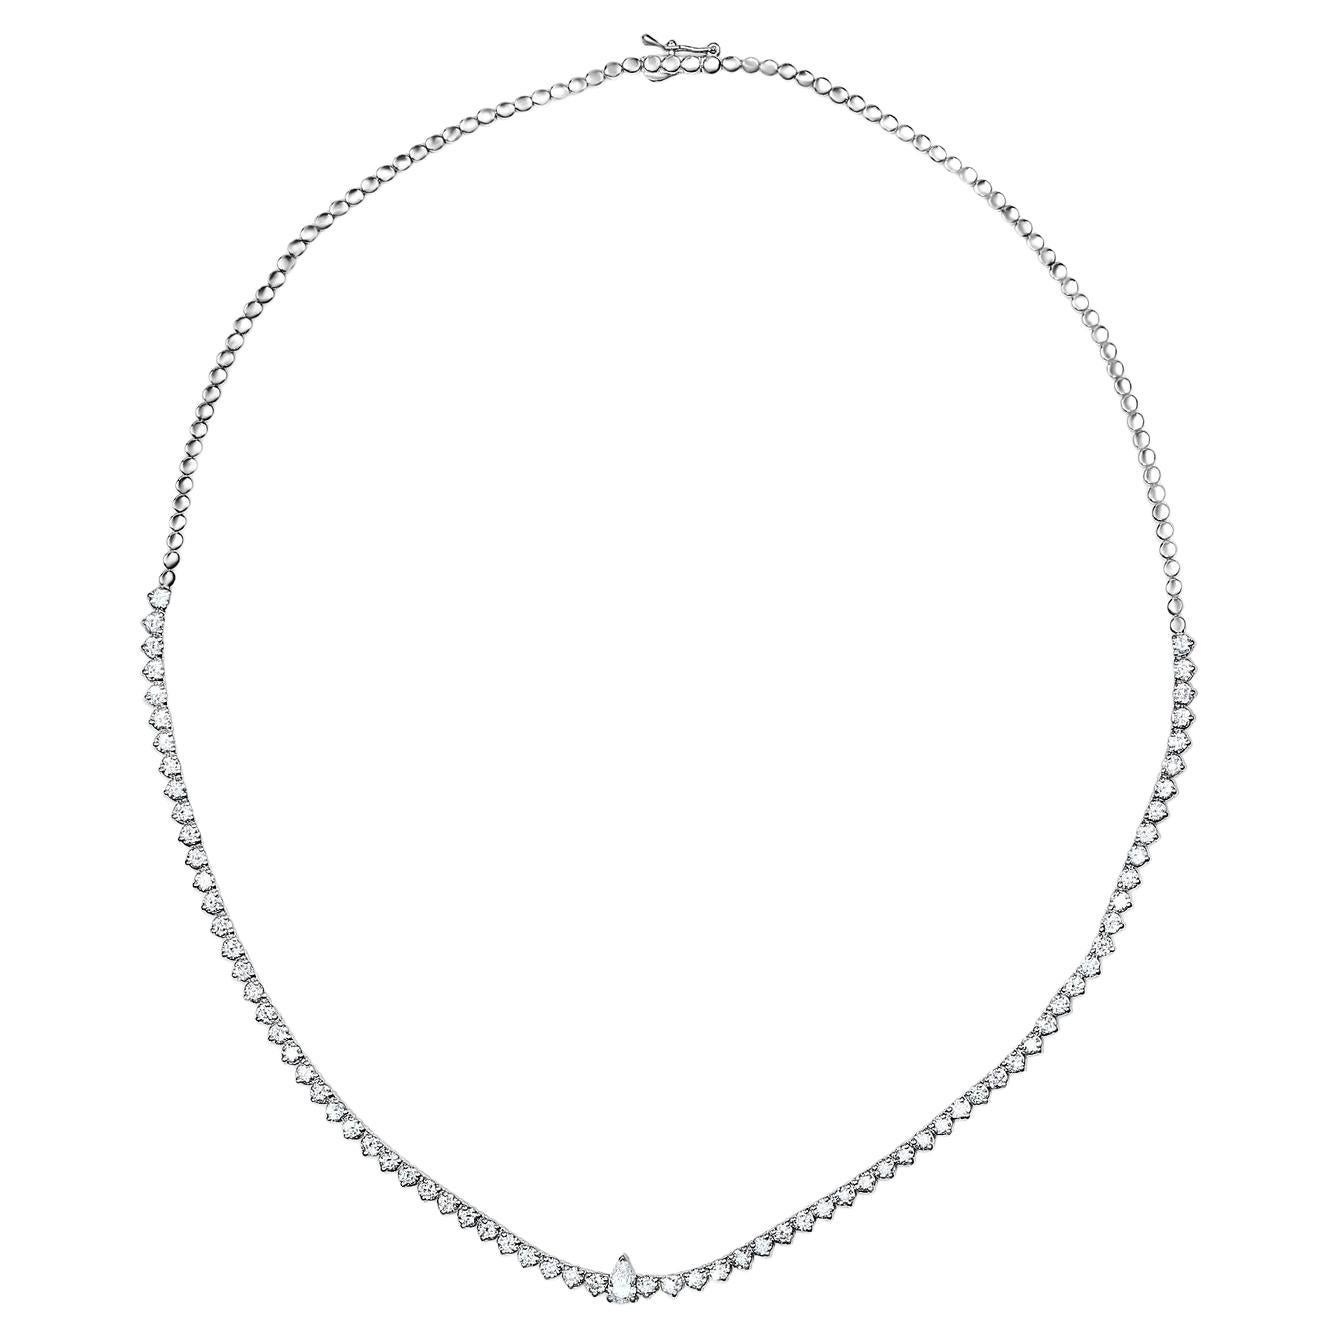 4.20 Carat Diamond Lor Collier Necklace in 14 Karat White Gold, Shlomit Rogel For Sale